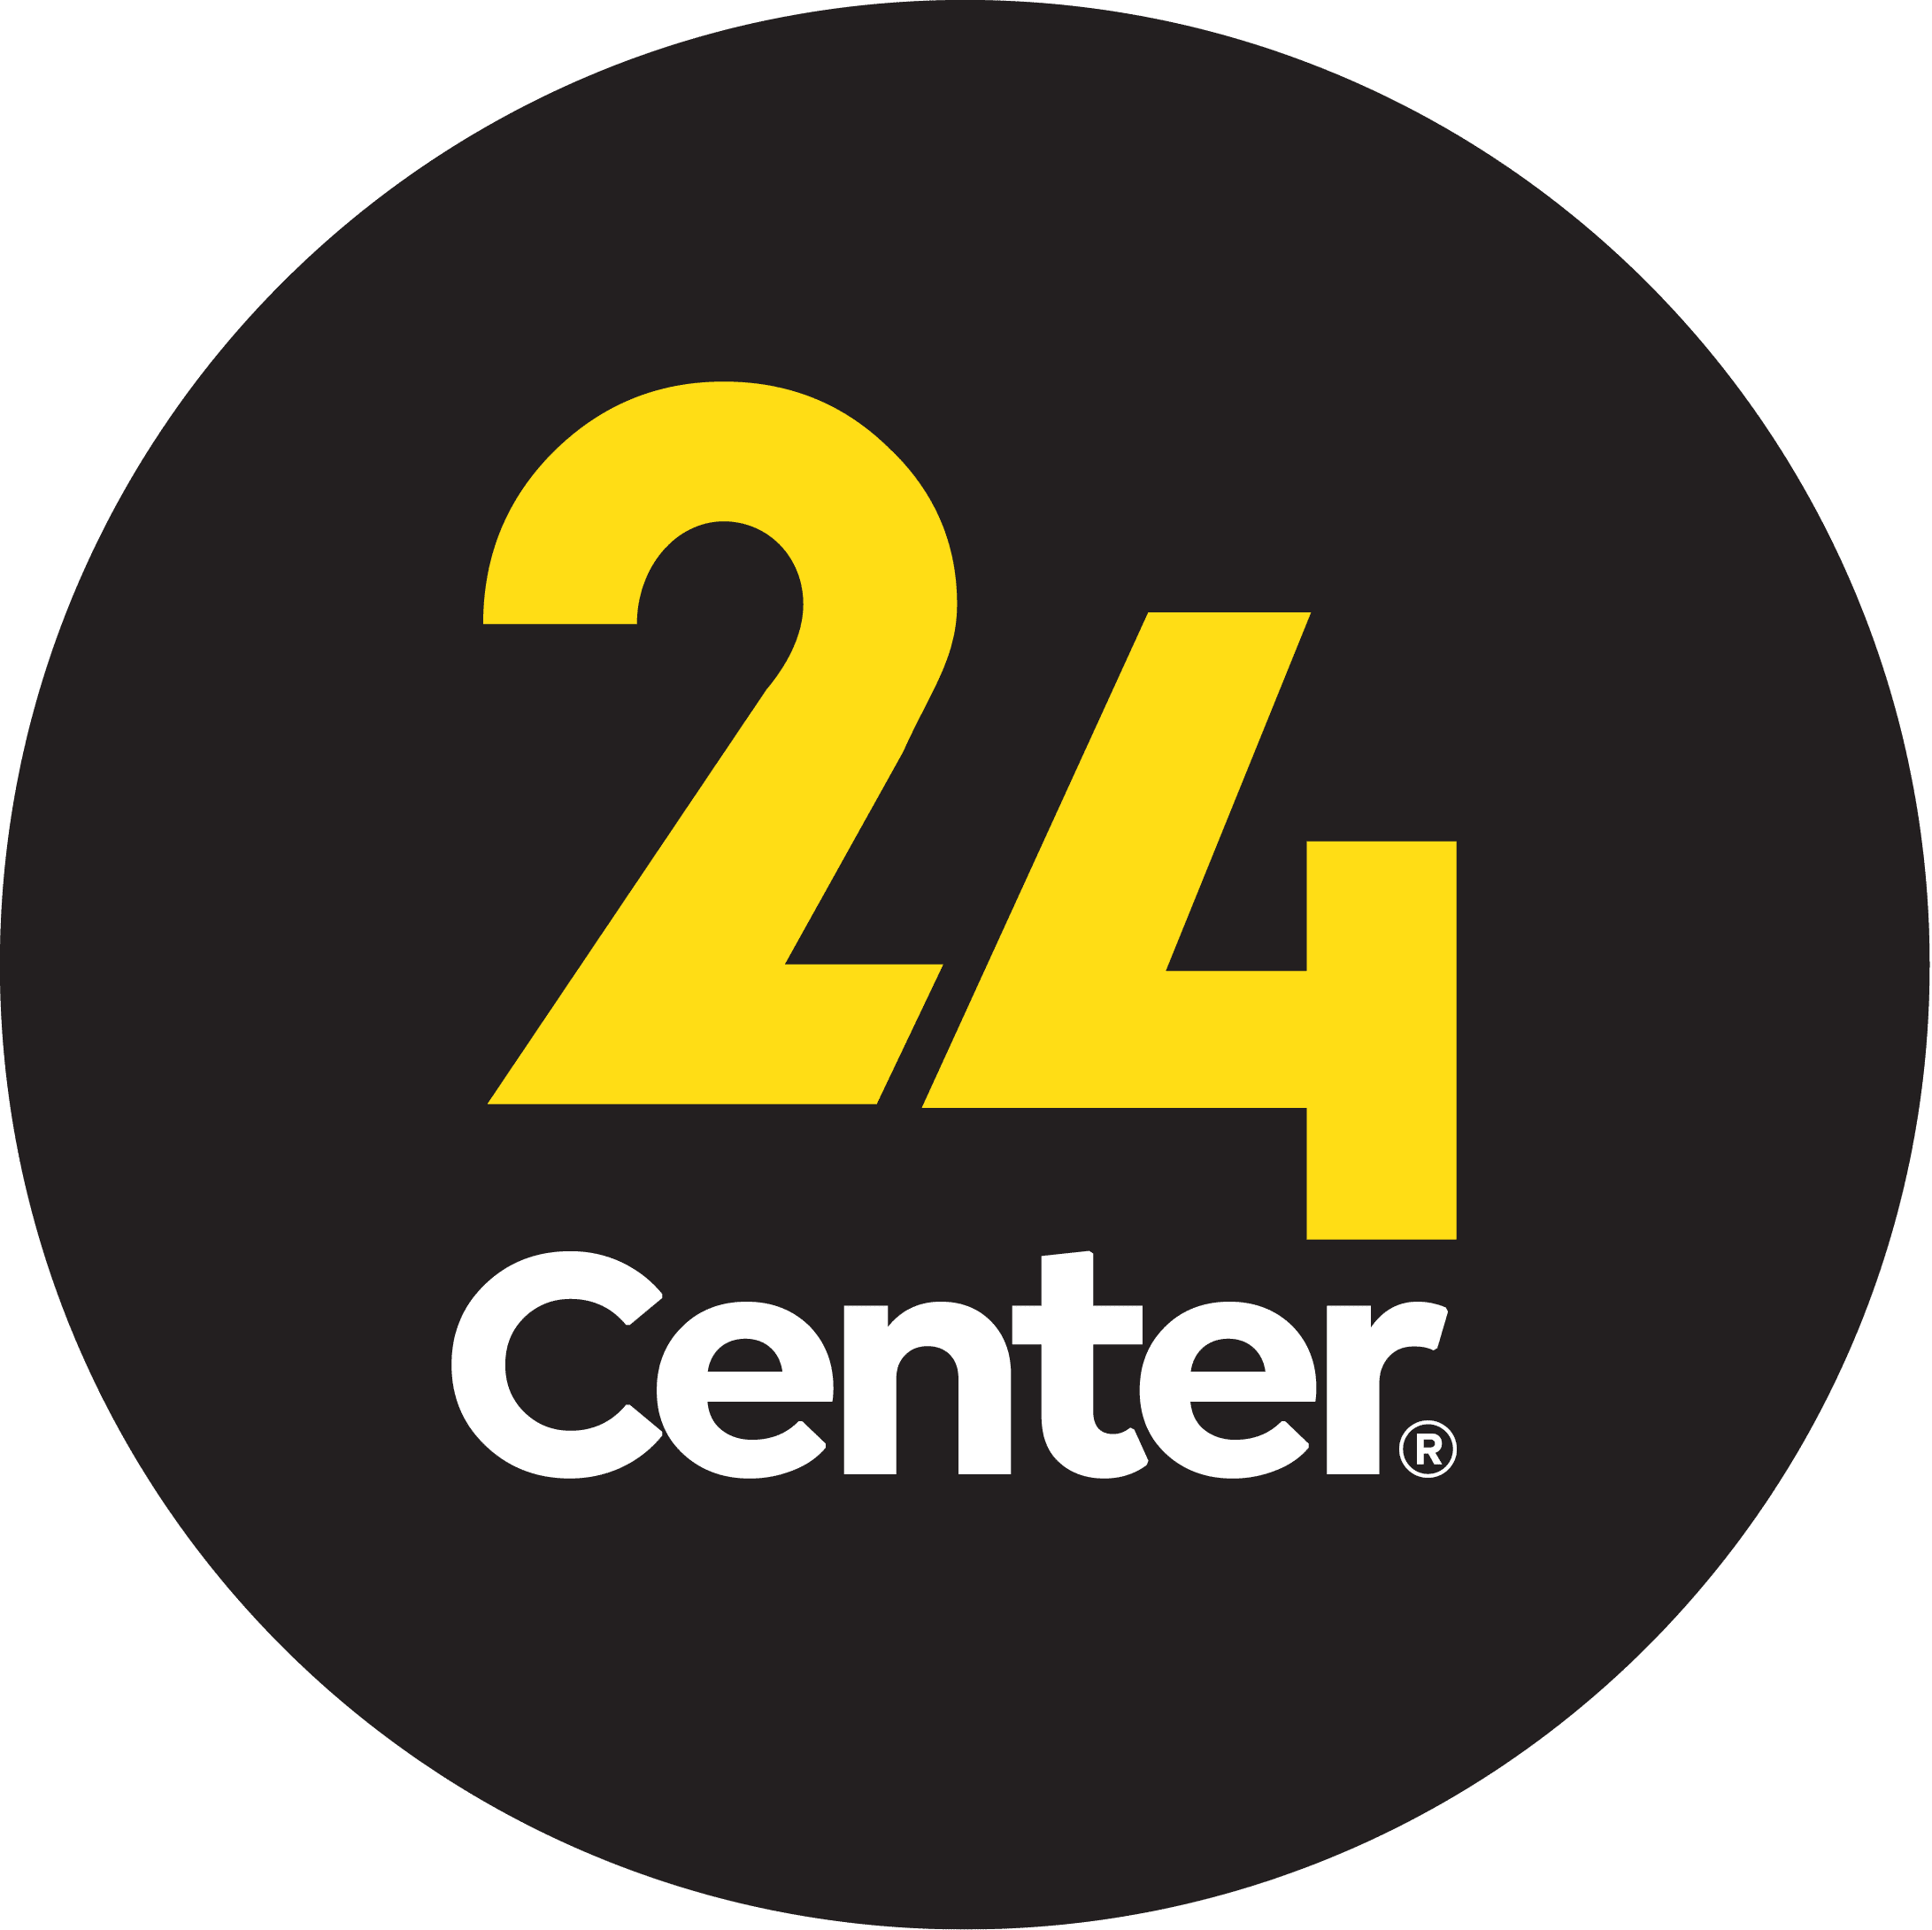 24 Center logo